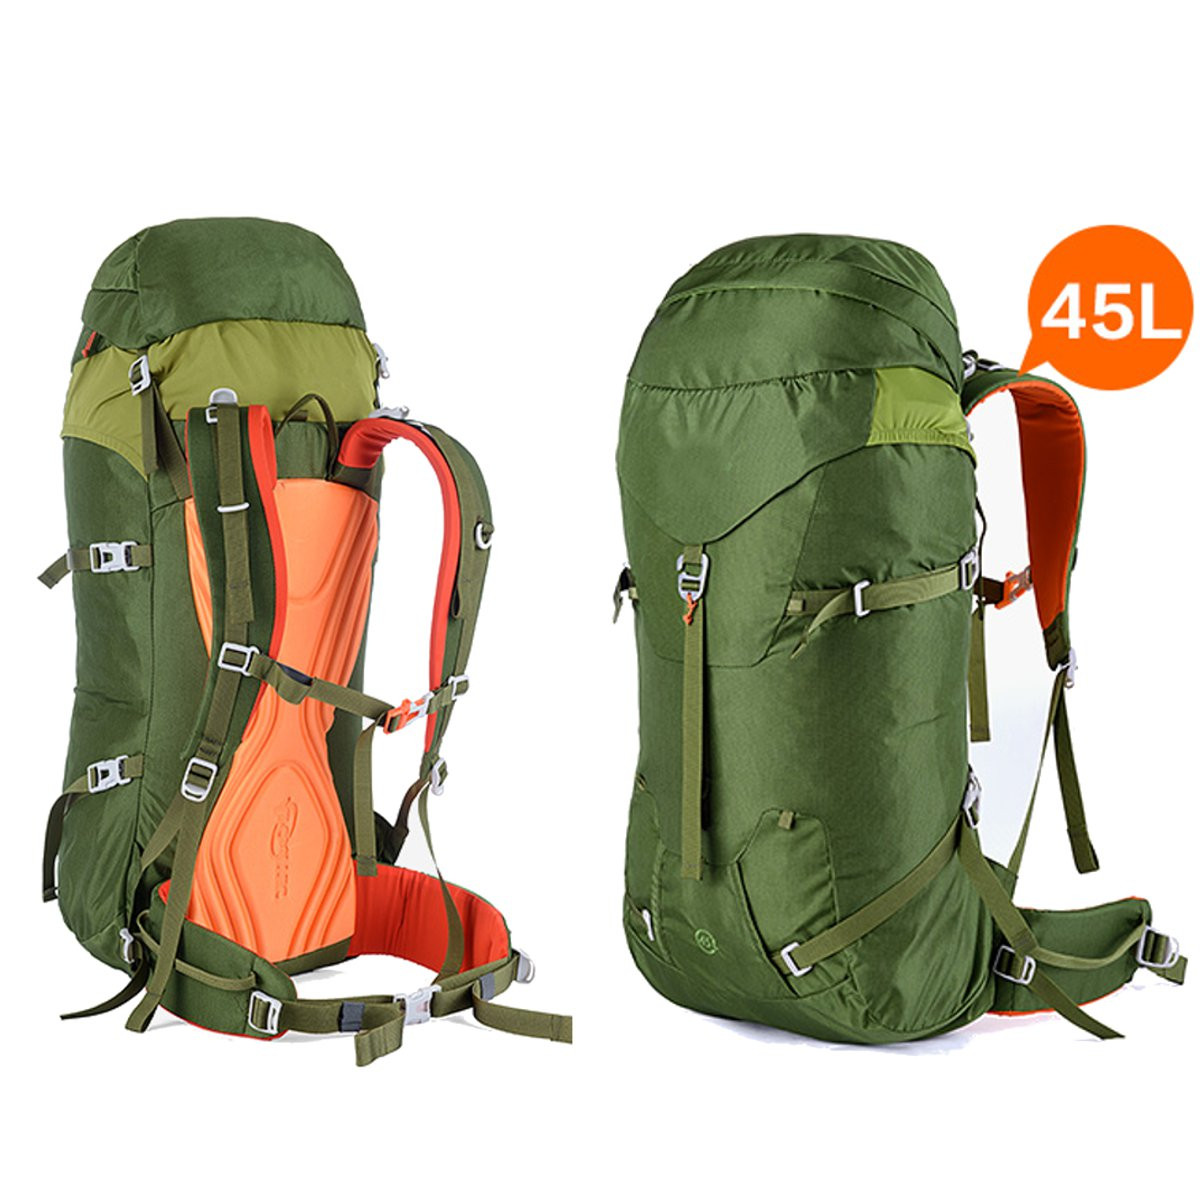 45L-Backpack-Waterproof-Lightweight-Outdoor-Mountaineering-Camping-Travel-Hiking-Bag-Shoulder-Bag-1891582-1